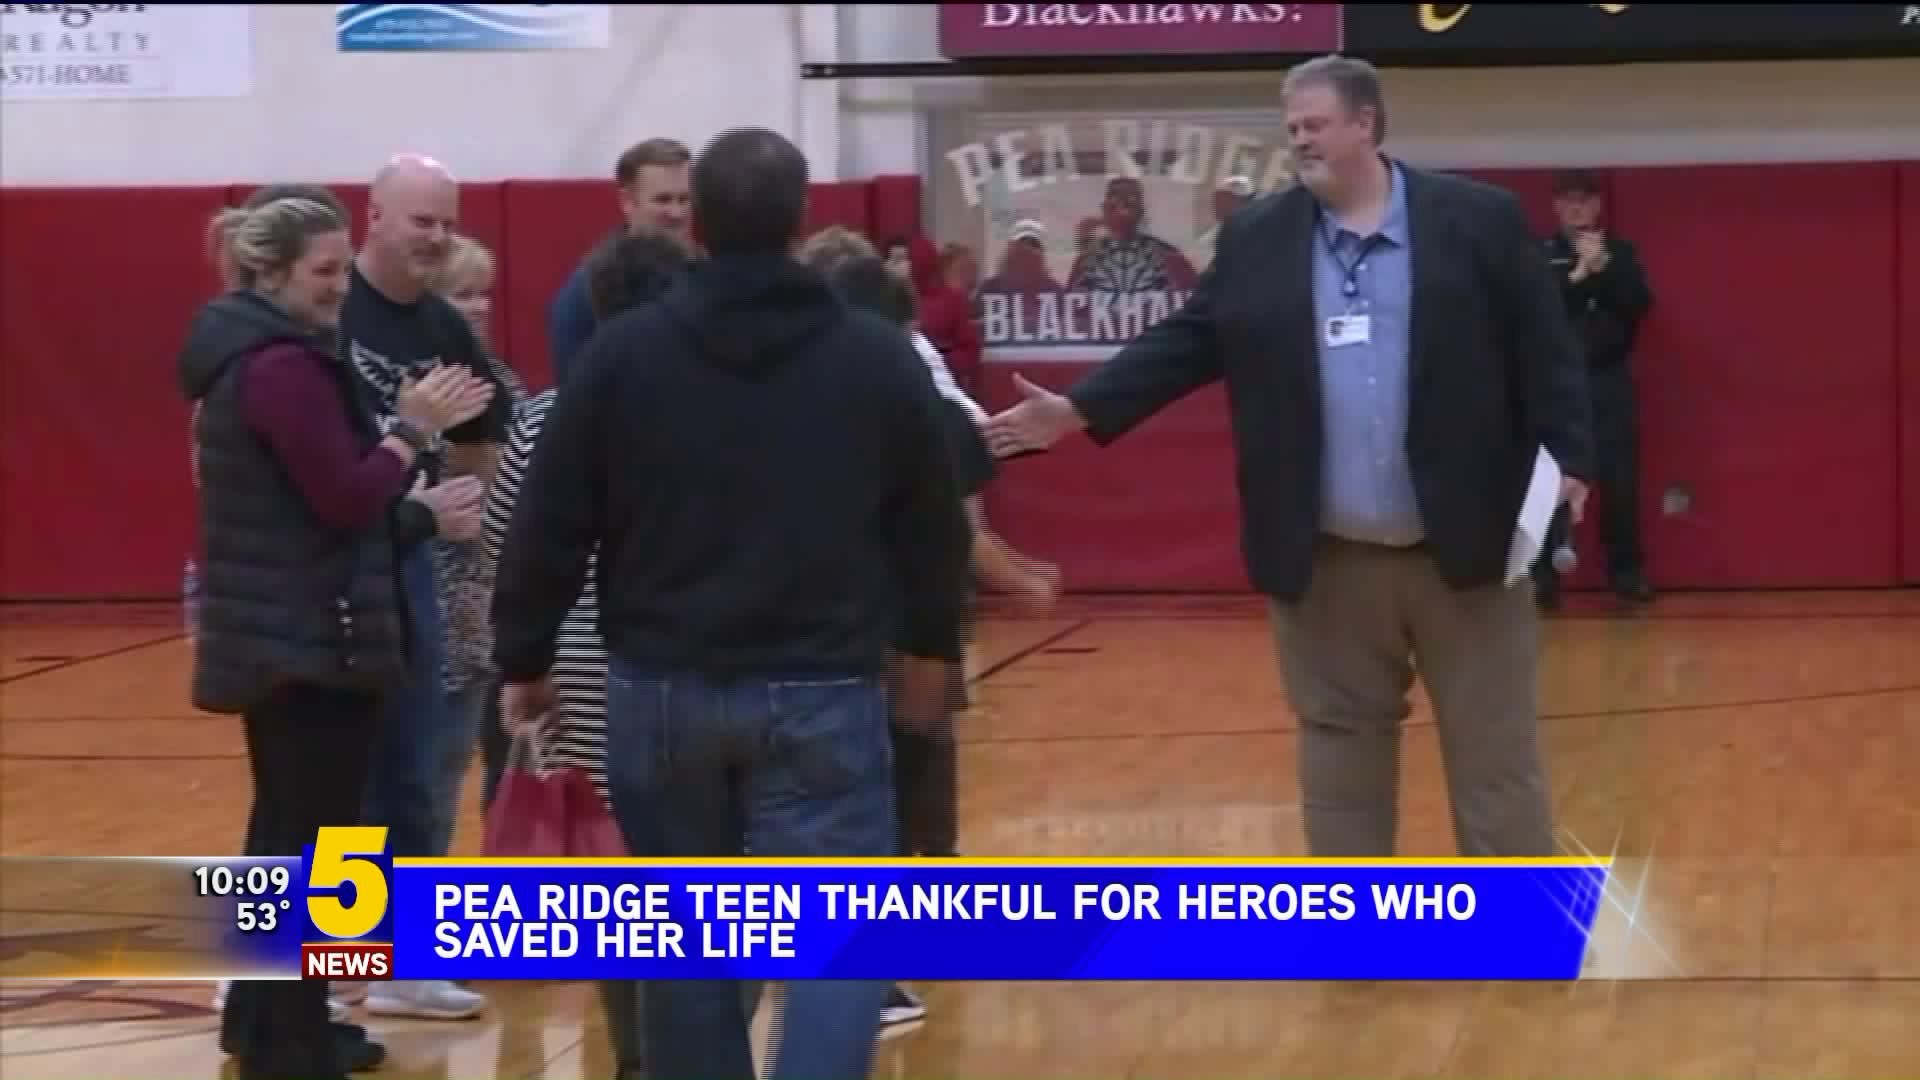 Pea Ridge Teen Thankful For Heroes Who Saved Her Life